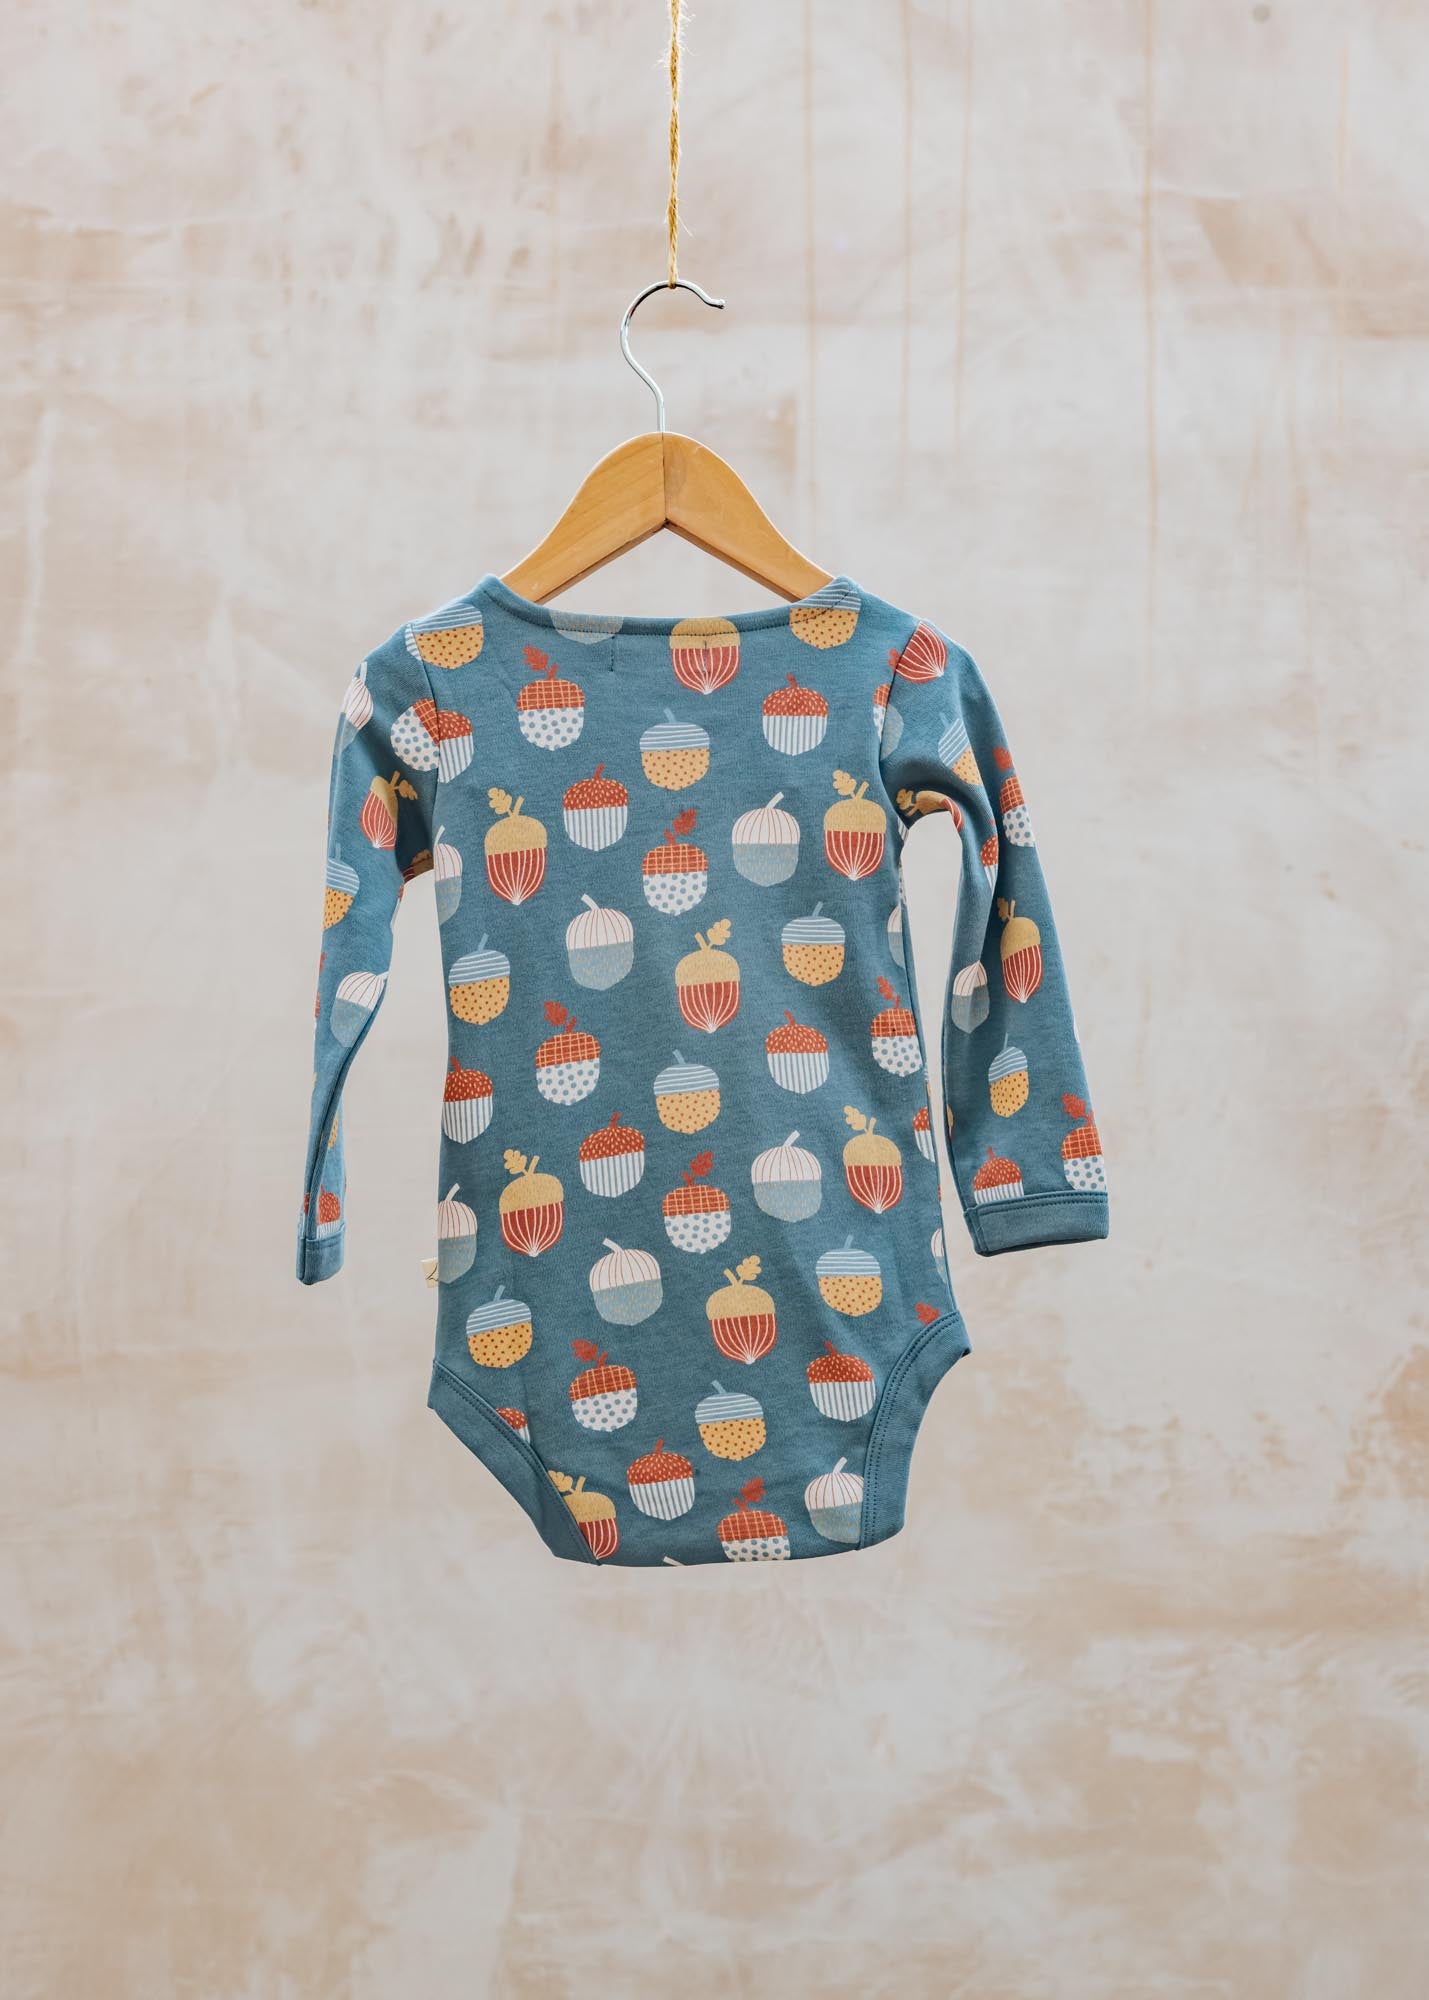 Pigeon Organics Babies' Bodysuit in Blue with Acorns